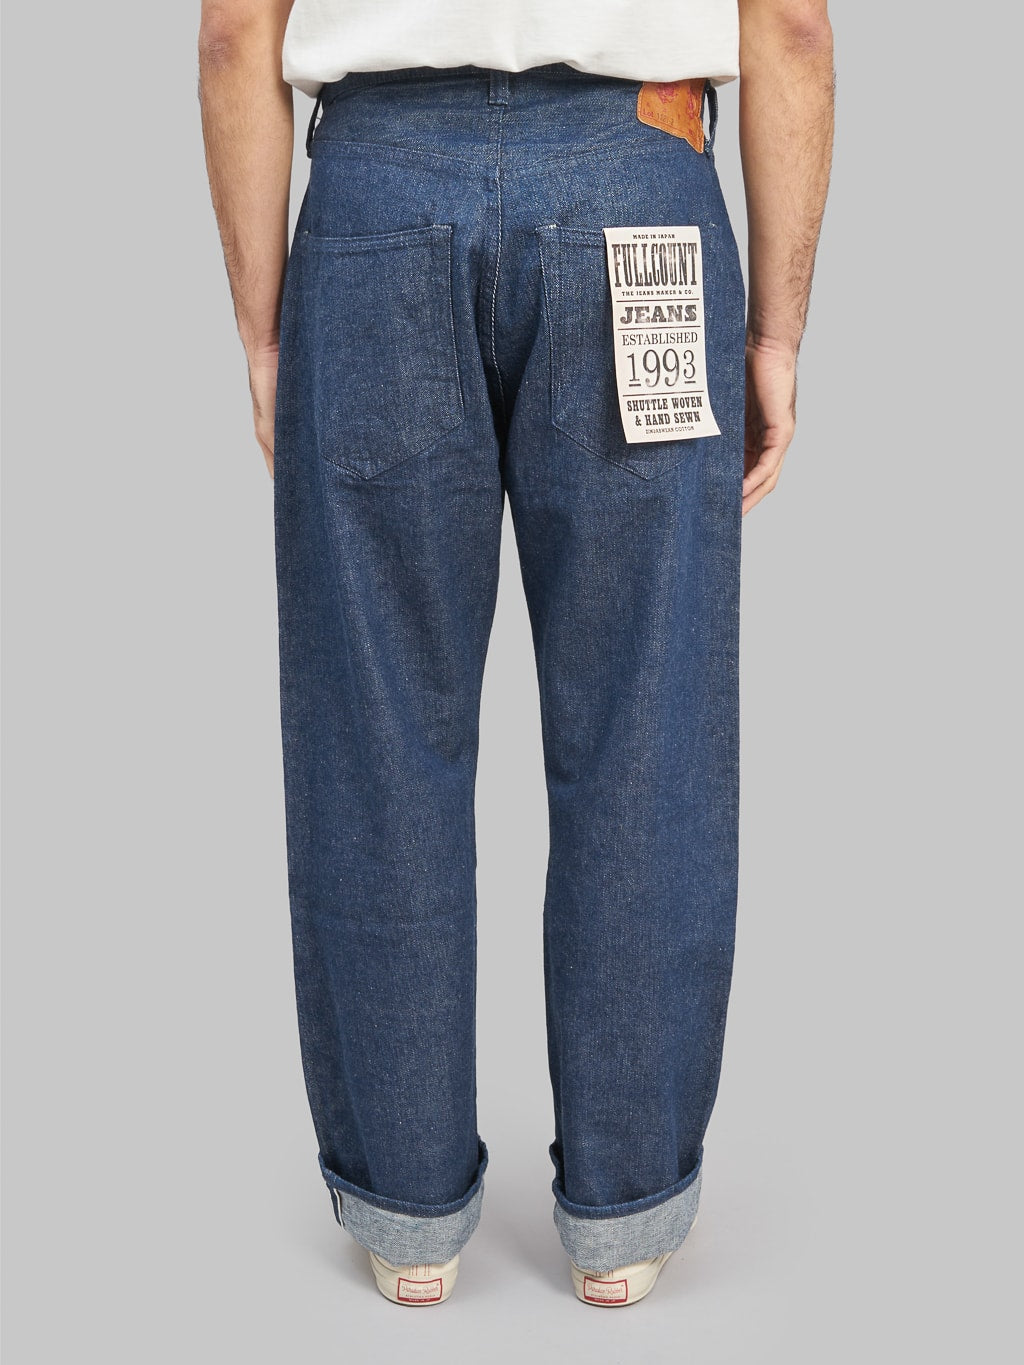 fullcount 1121 duke original selvedge denim super wide jeans back rise